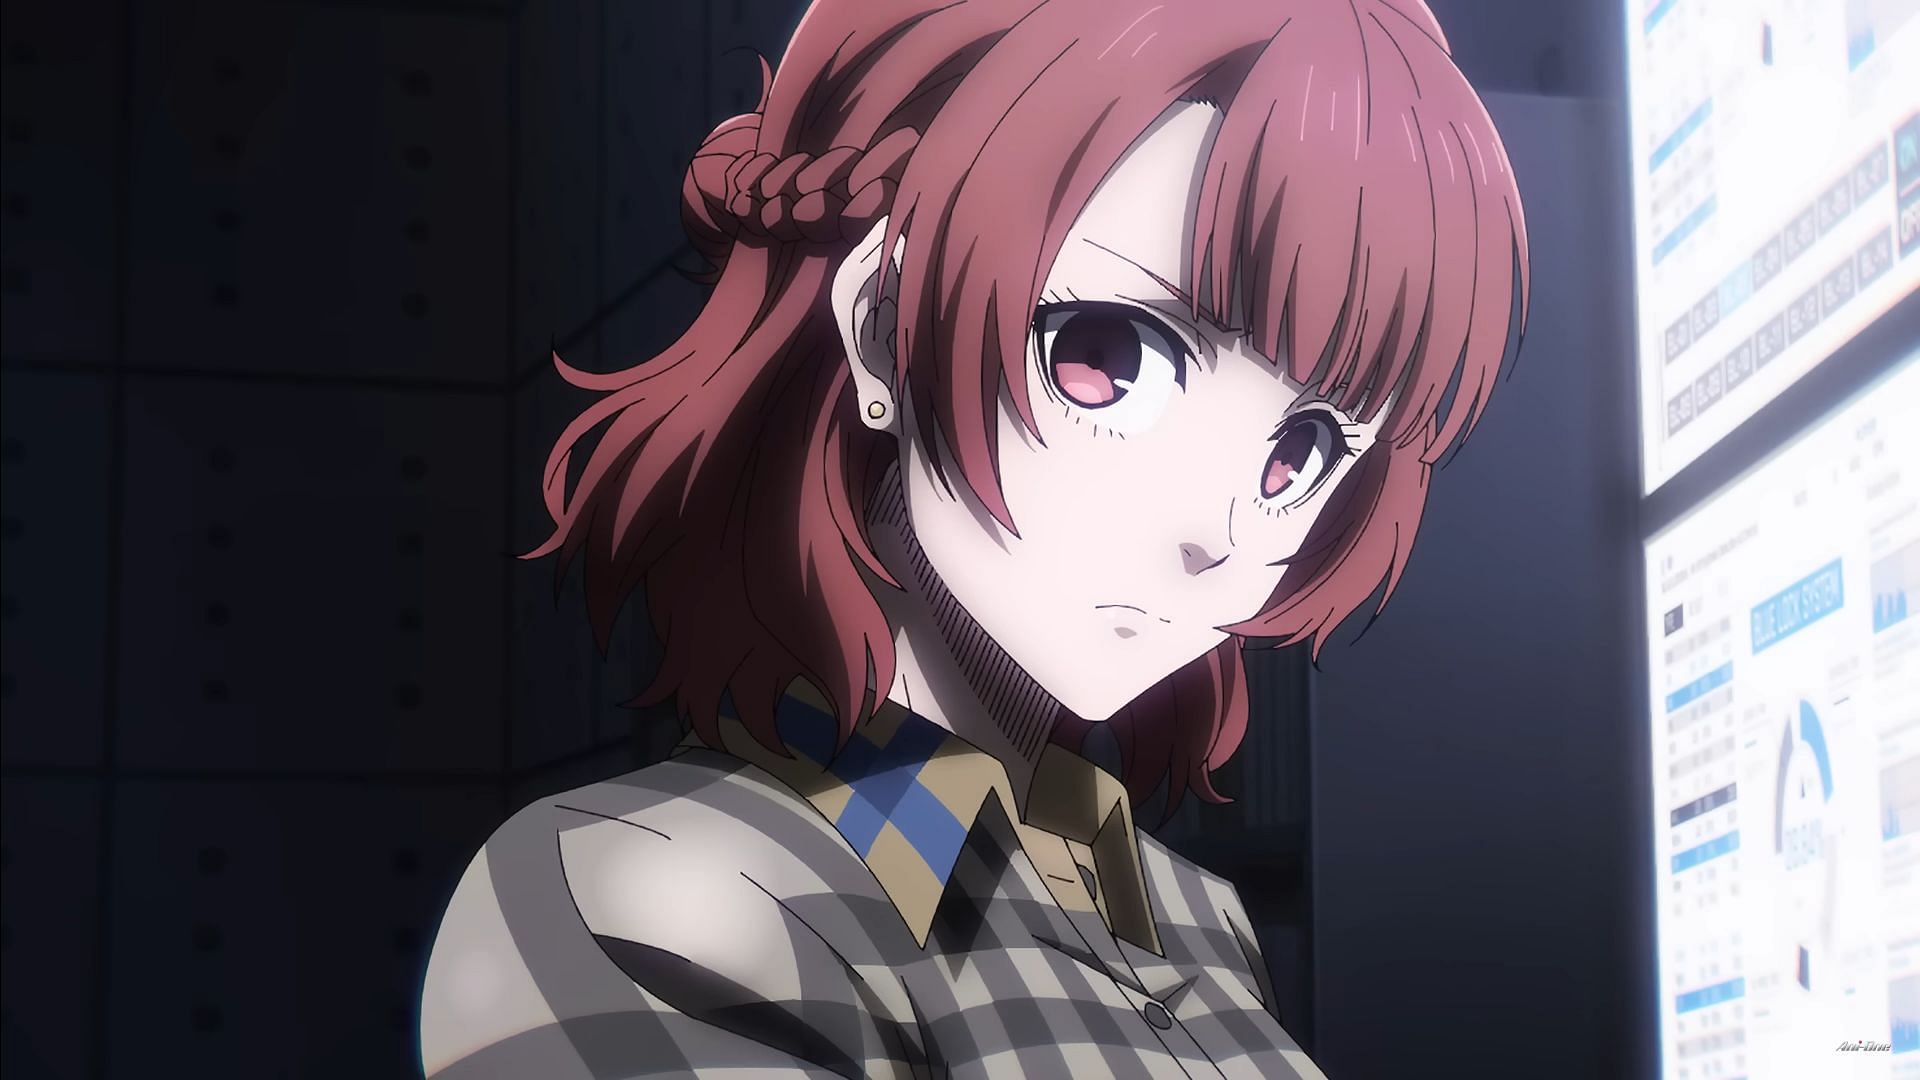 Anri-chan as seen in Blue Lock episode 12 (Image via 8bit)